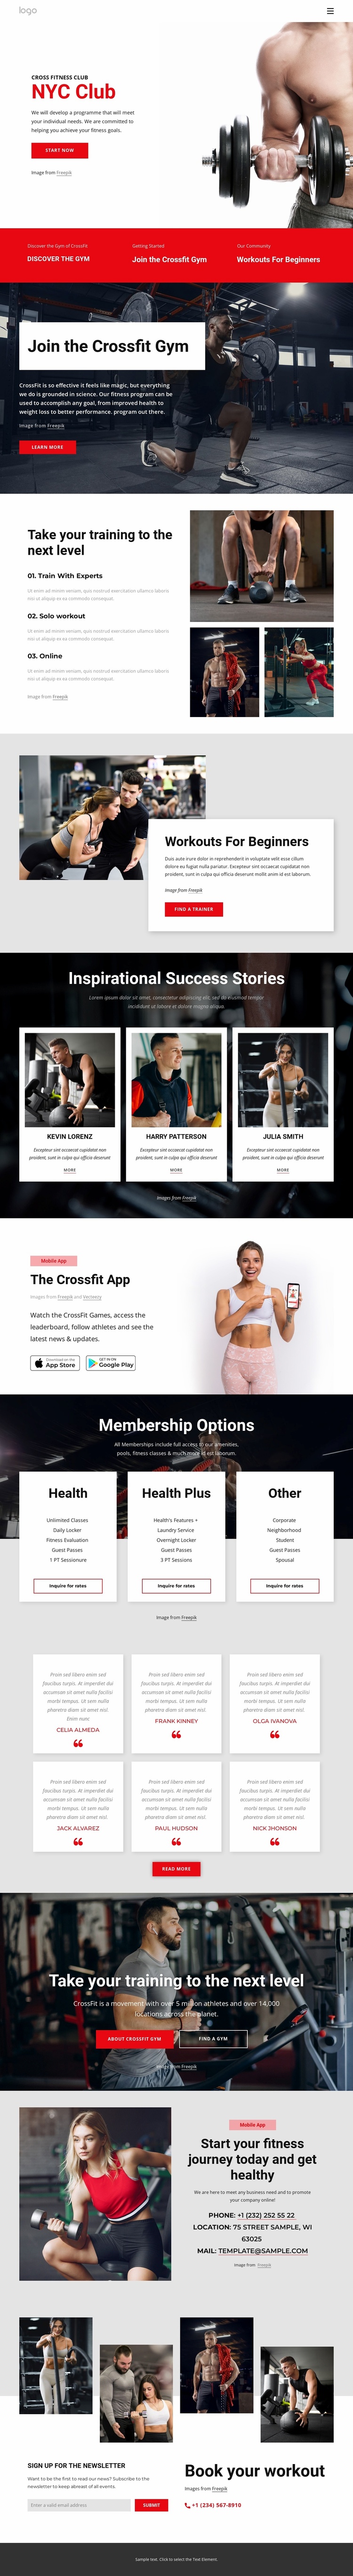 Cross fitness club Website Template